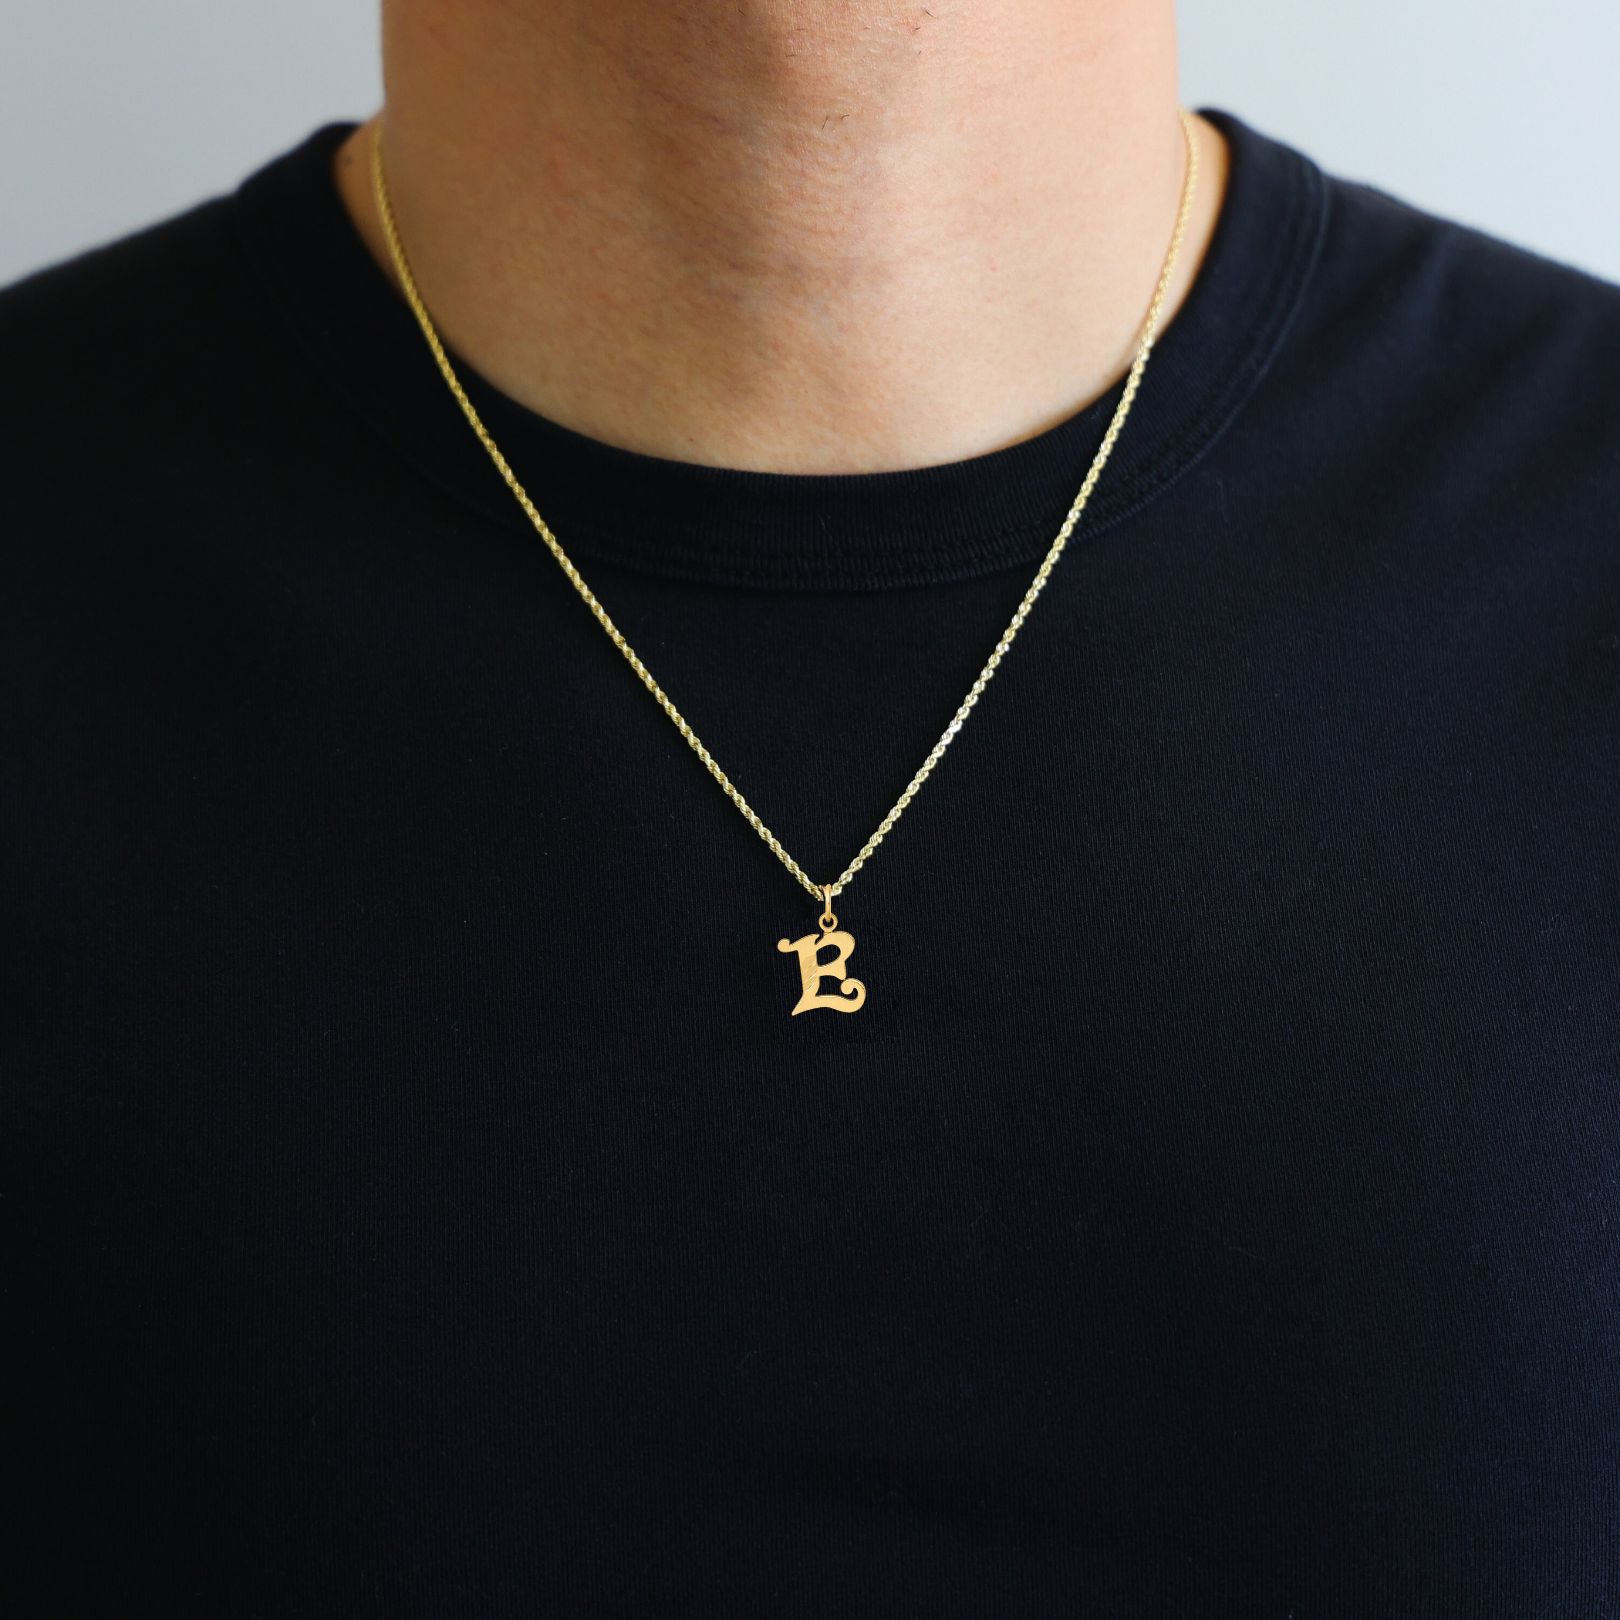 Gold Elegant Letter 'E' Charm Model-C4833 - Charlie & Co. Jewelry